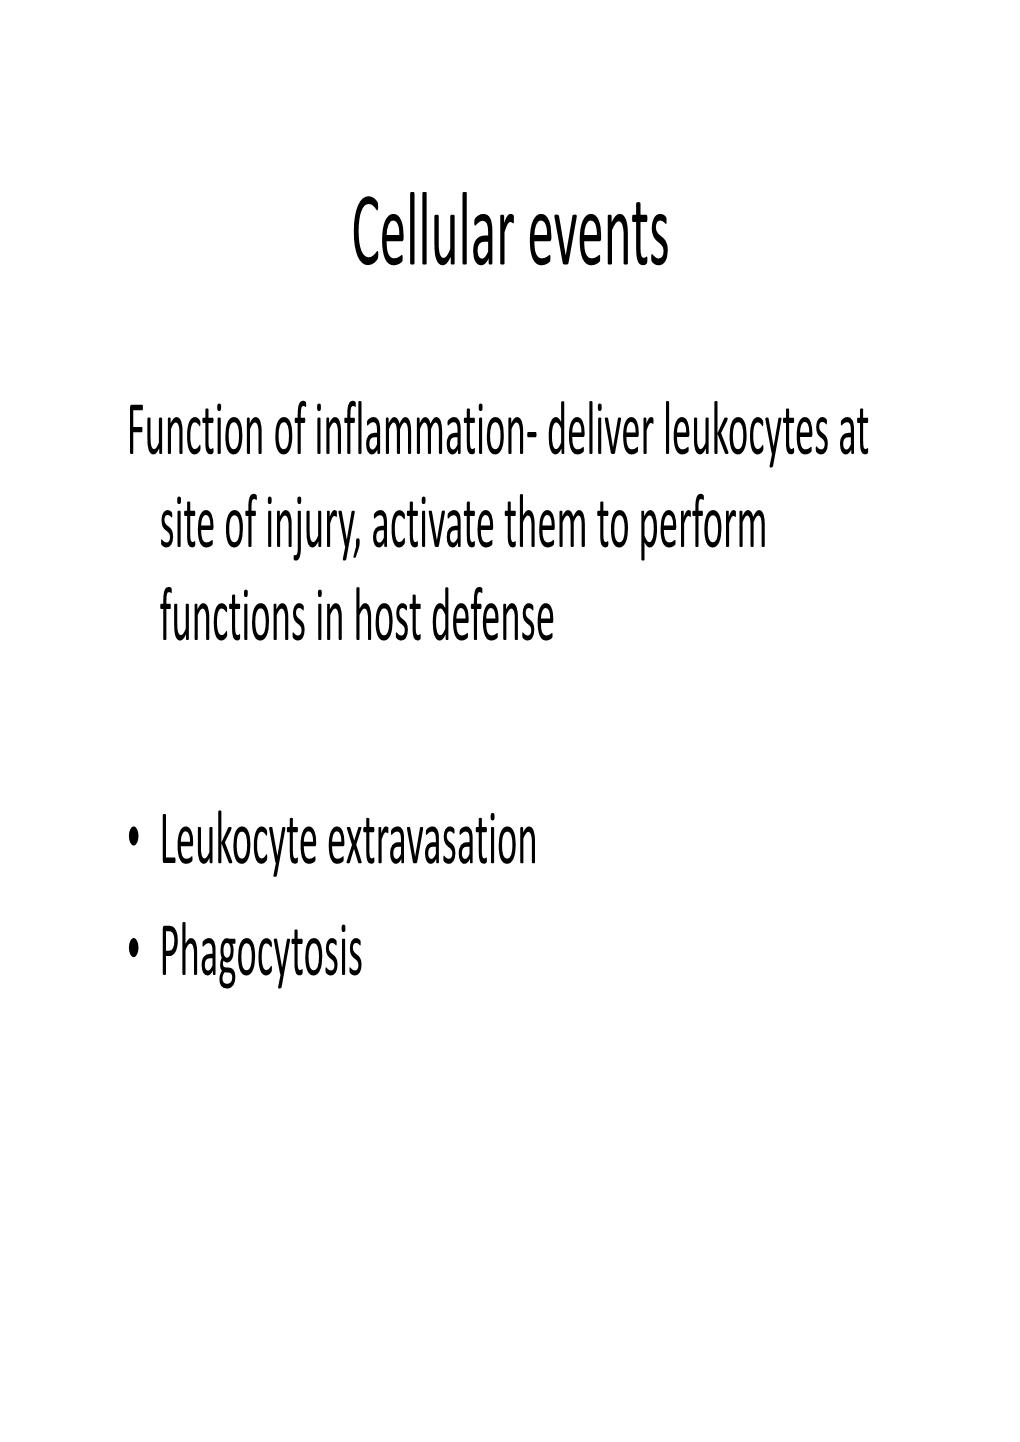 L2 Cellular Events